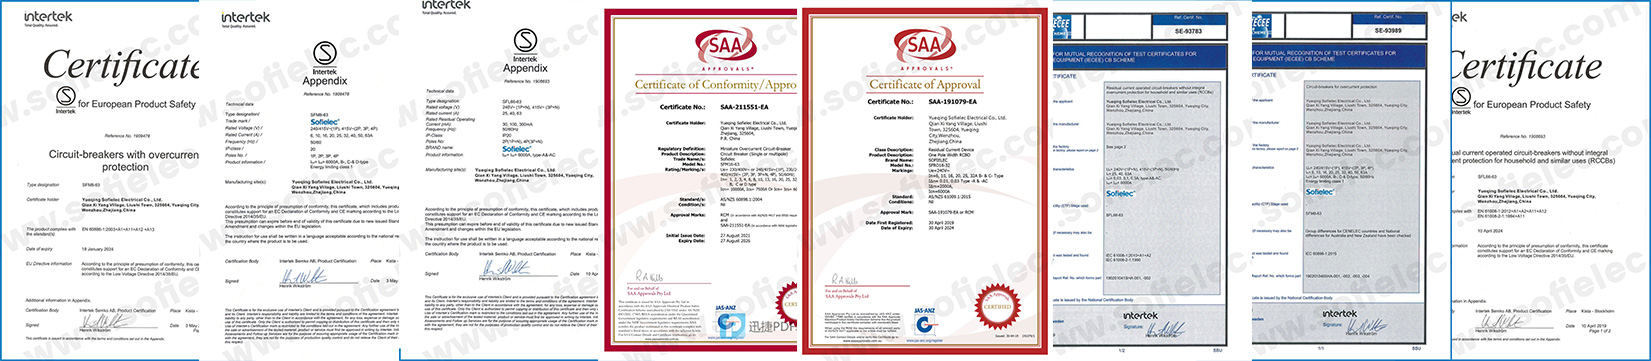 Certification Certificate